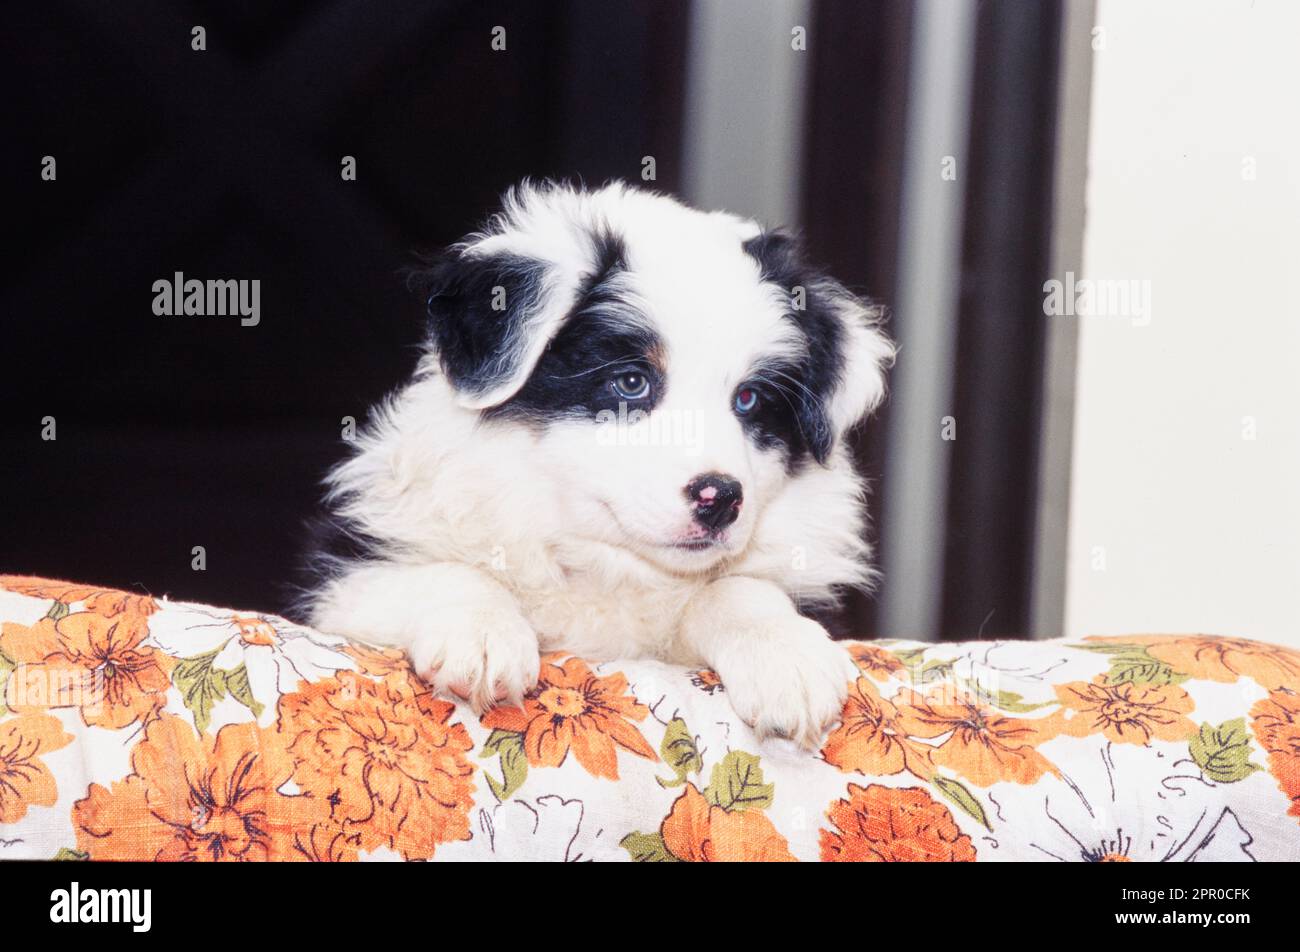 Australian Shepherd puppy sitting up on orange floral blanket Stock Photo